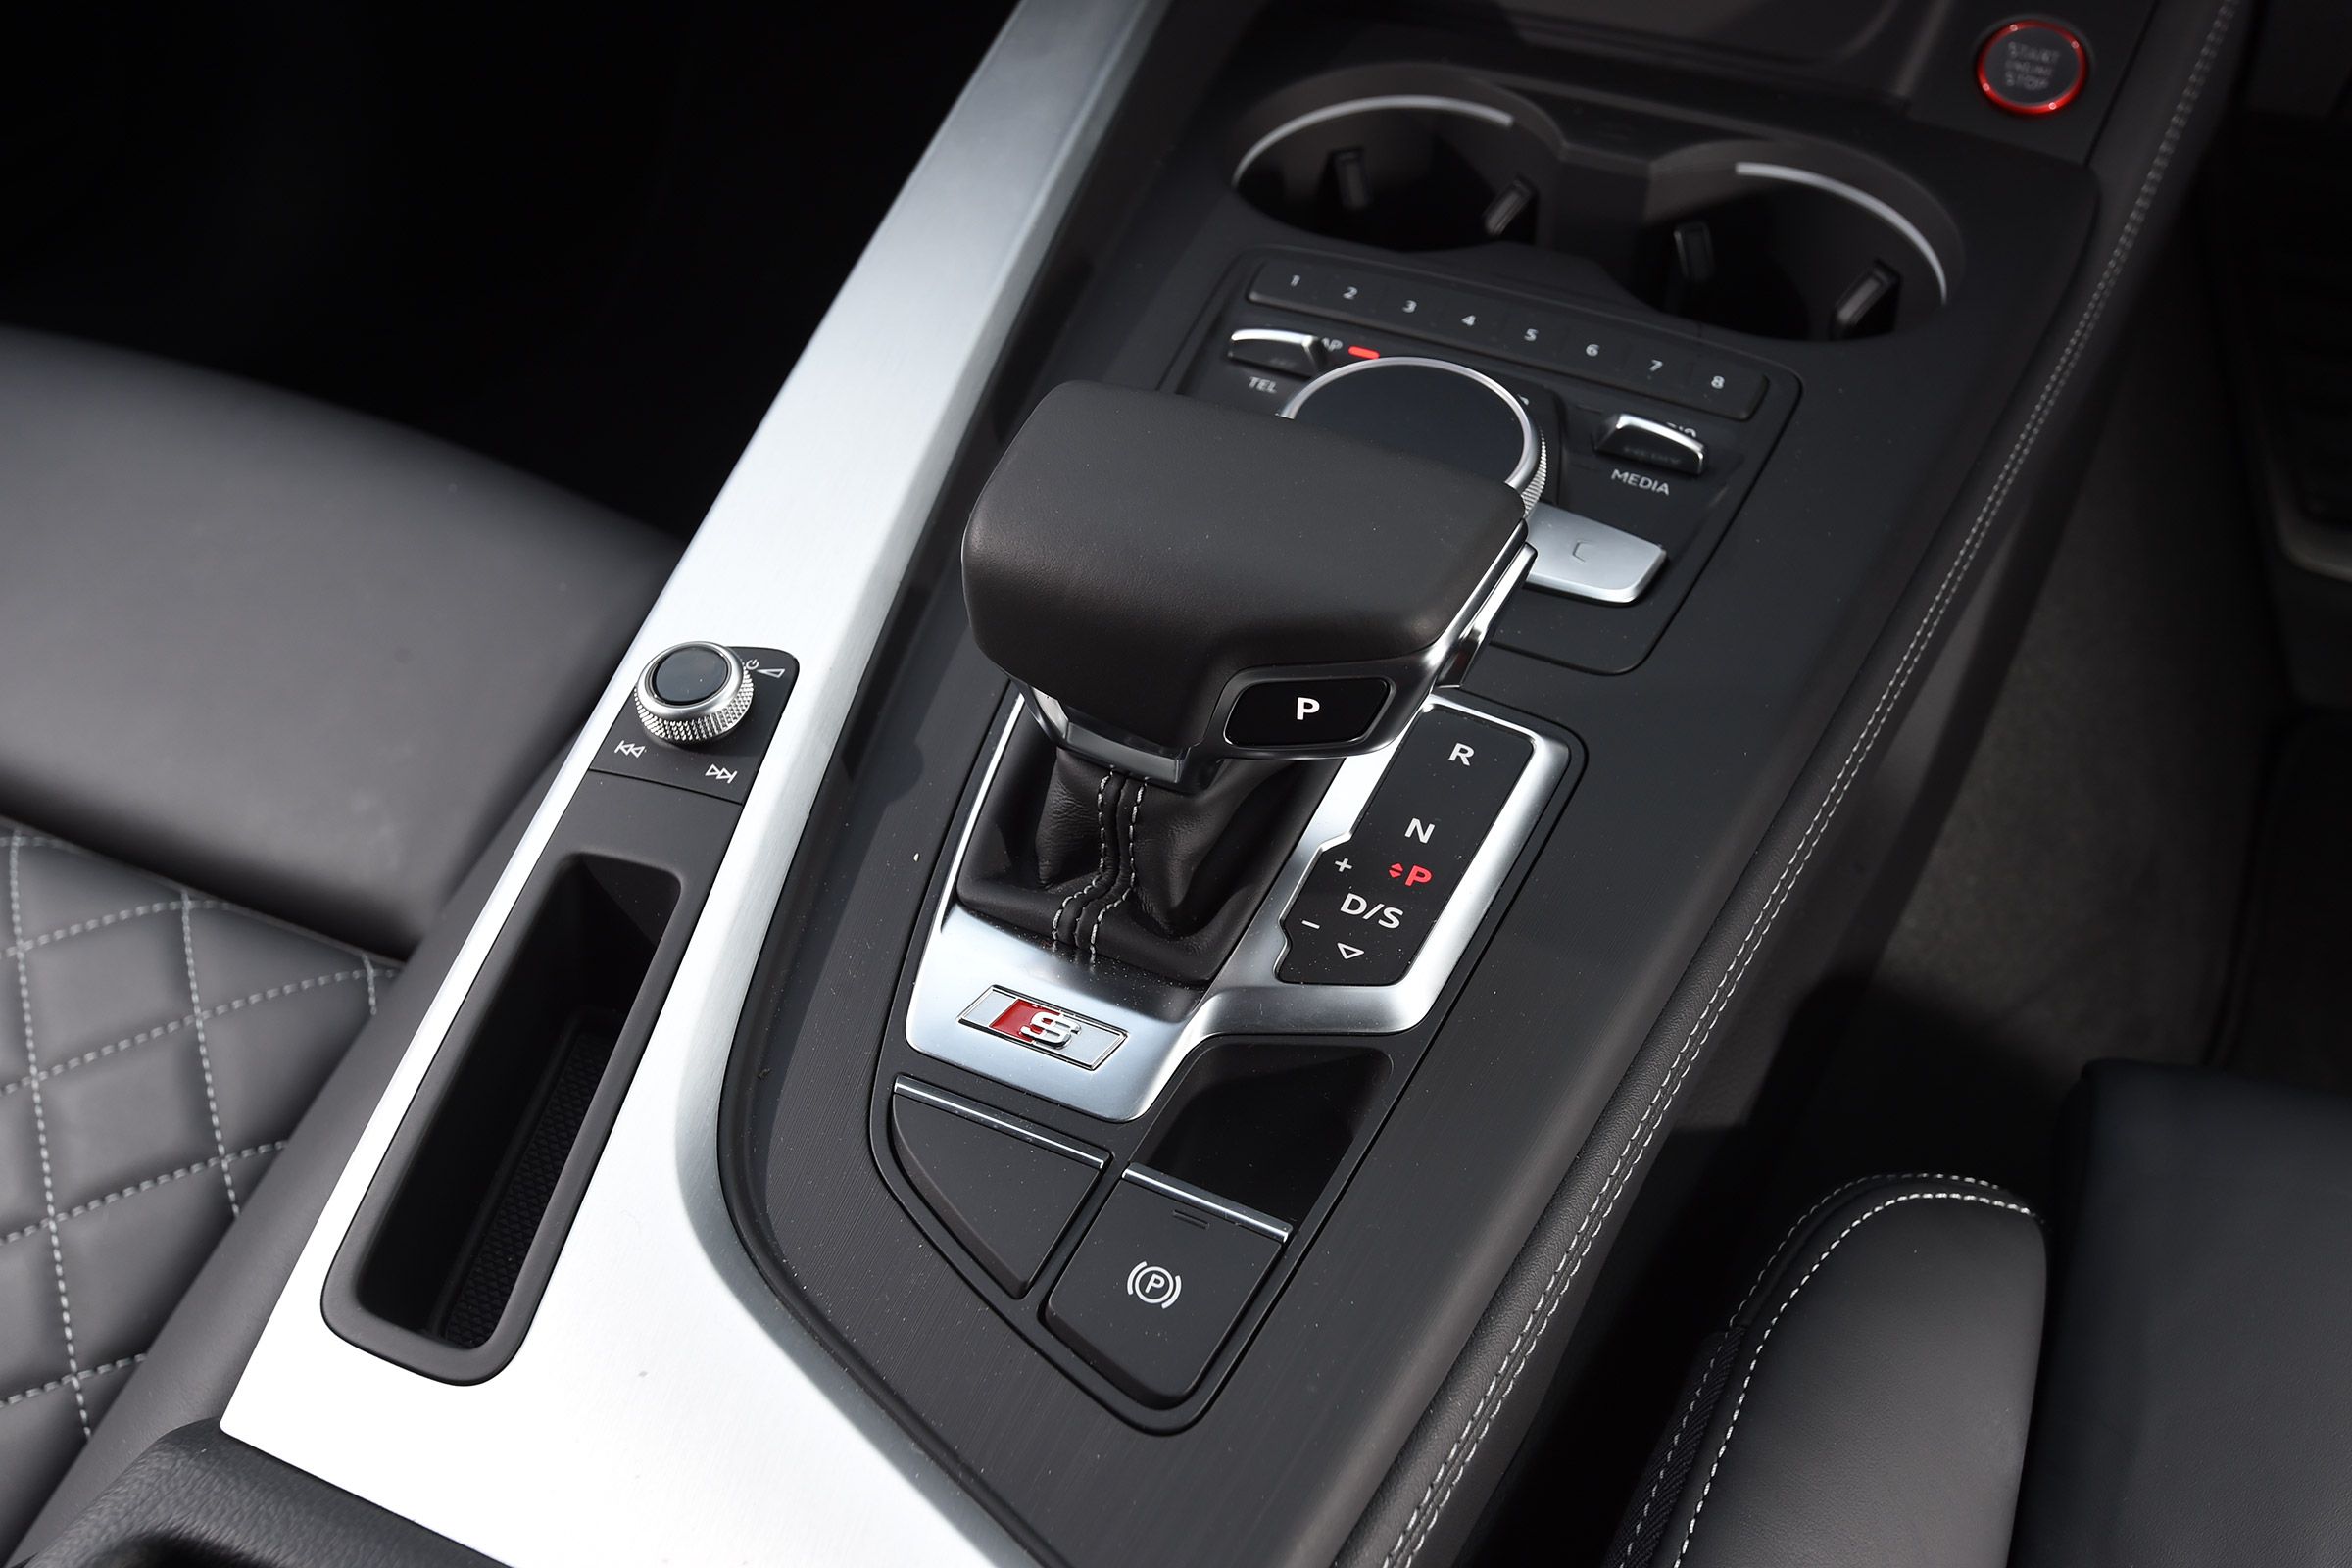 2017 Audi S4 Avant Interior View Gear Shift Knob (View 8 of 17)